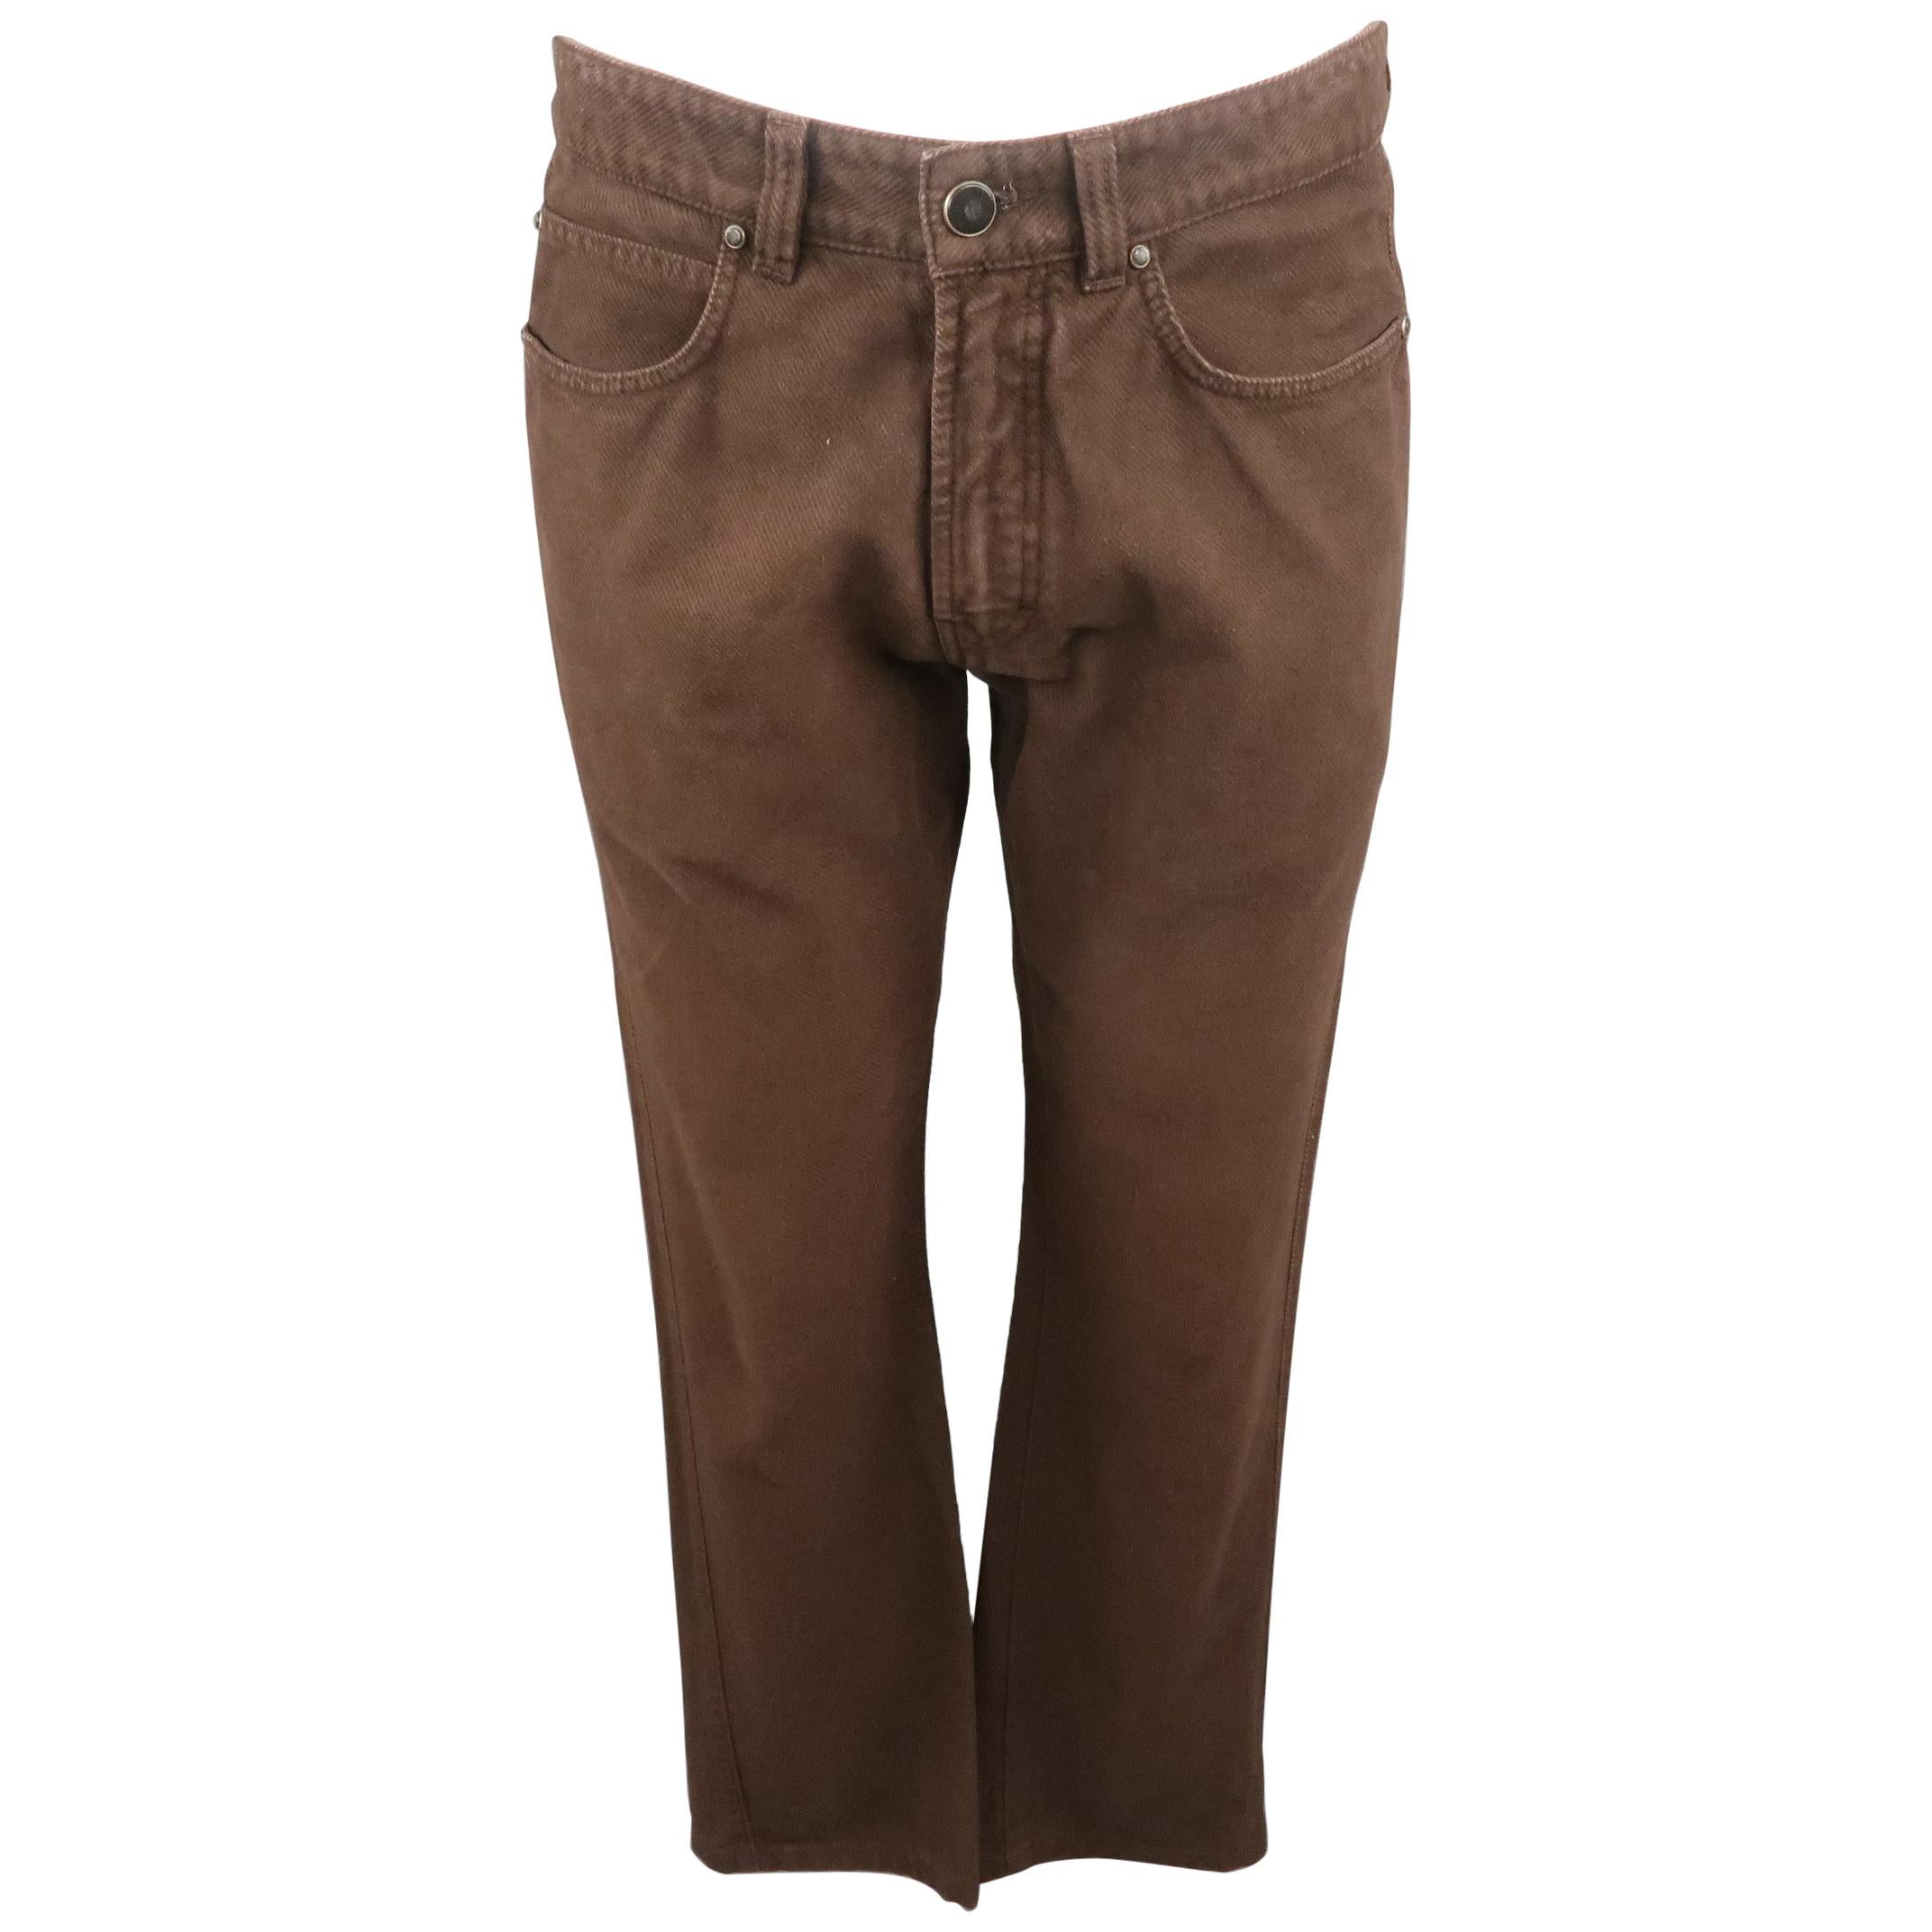 ERMENEGILDO ZEGNA Size 32 Brown Solid Cotton Jeans